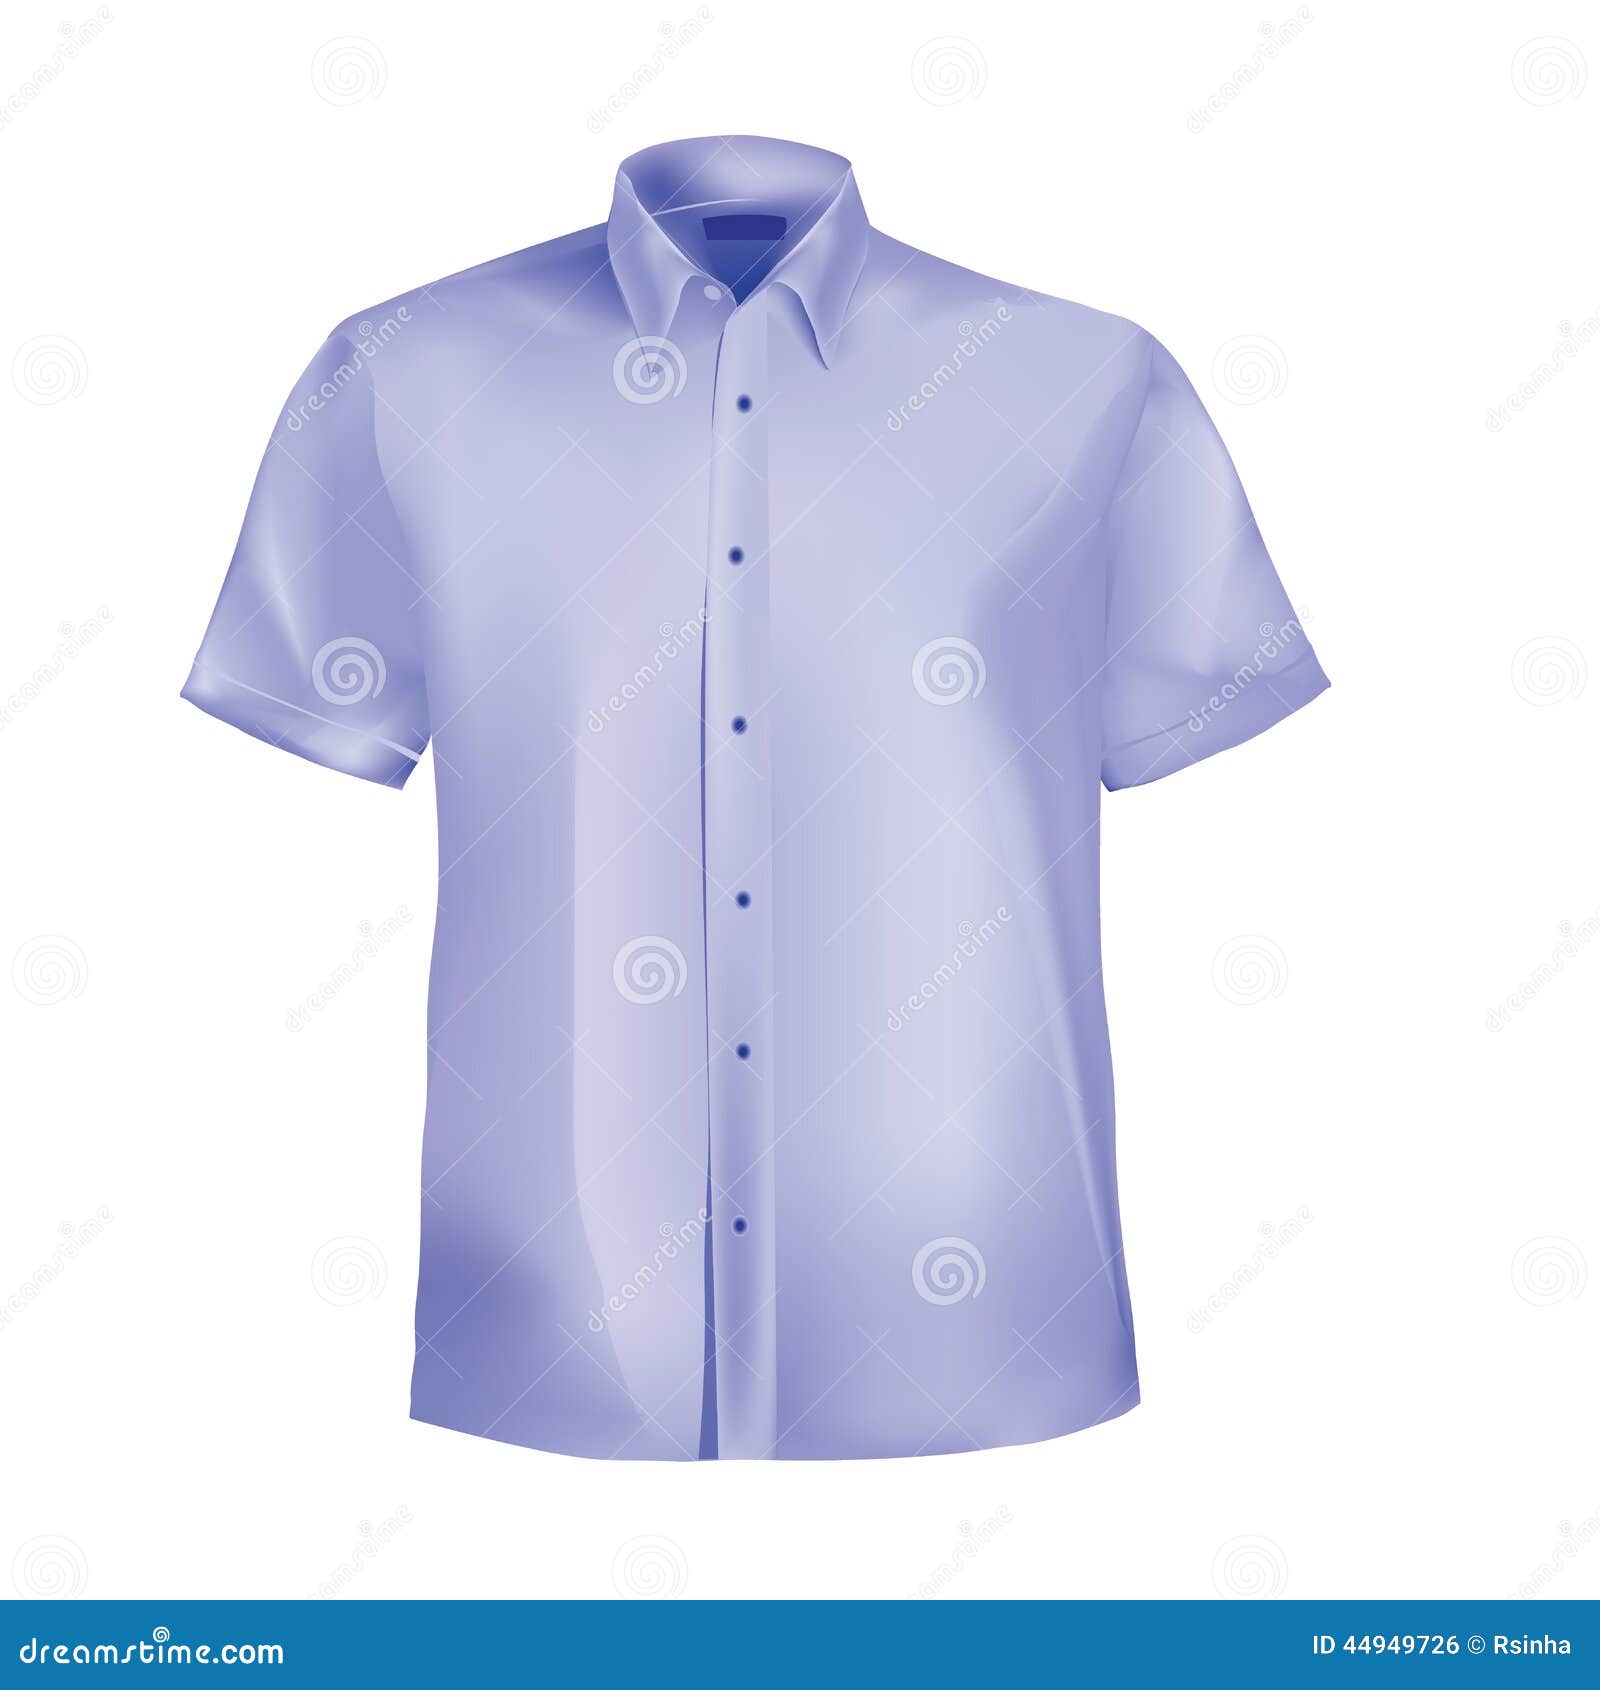 Dress Shirt Front Placket Types  Proper Cloth Help